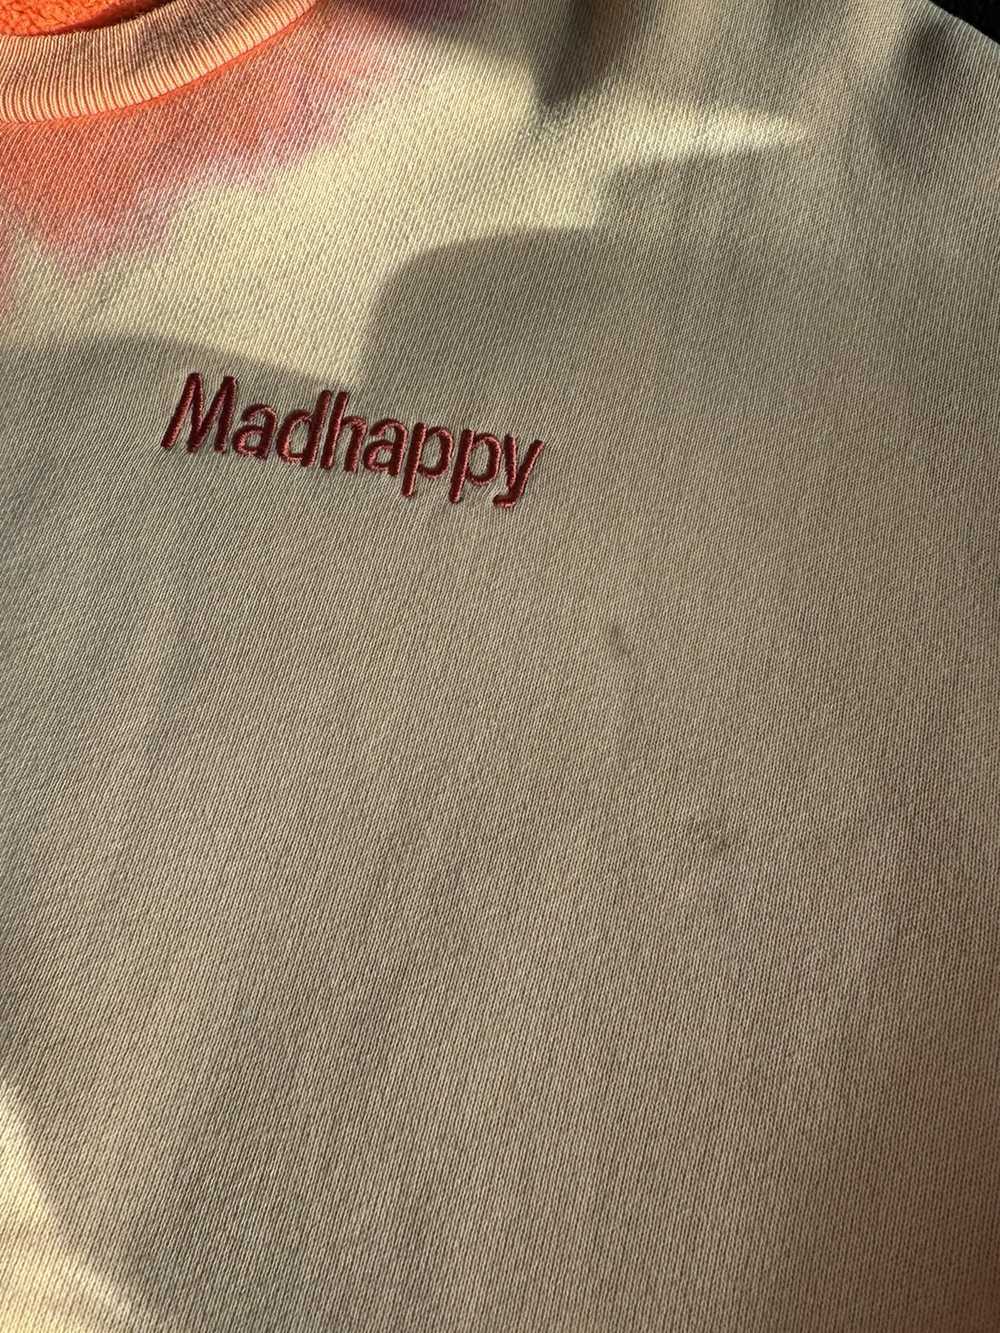 Madhappy Madhappy limited-edition “Sunburst” crew… - image 3